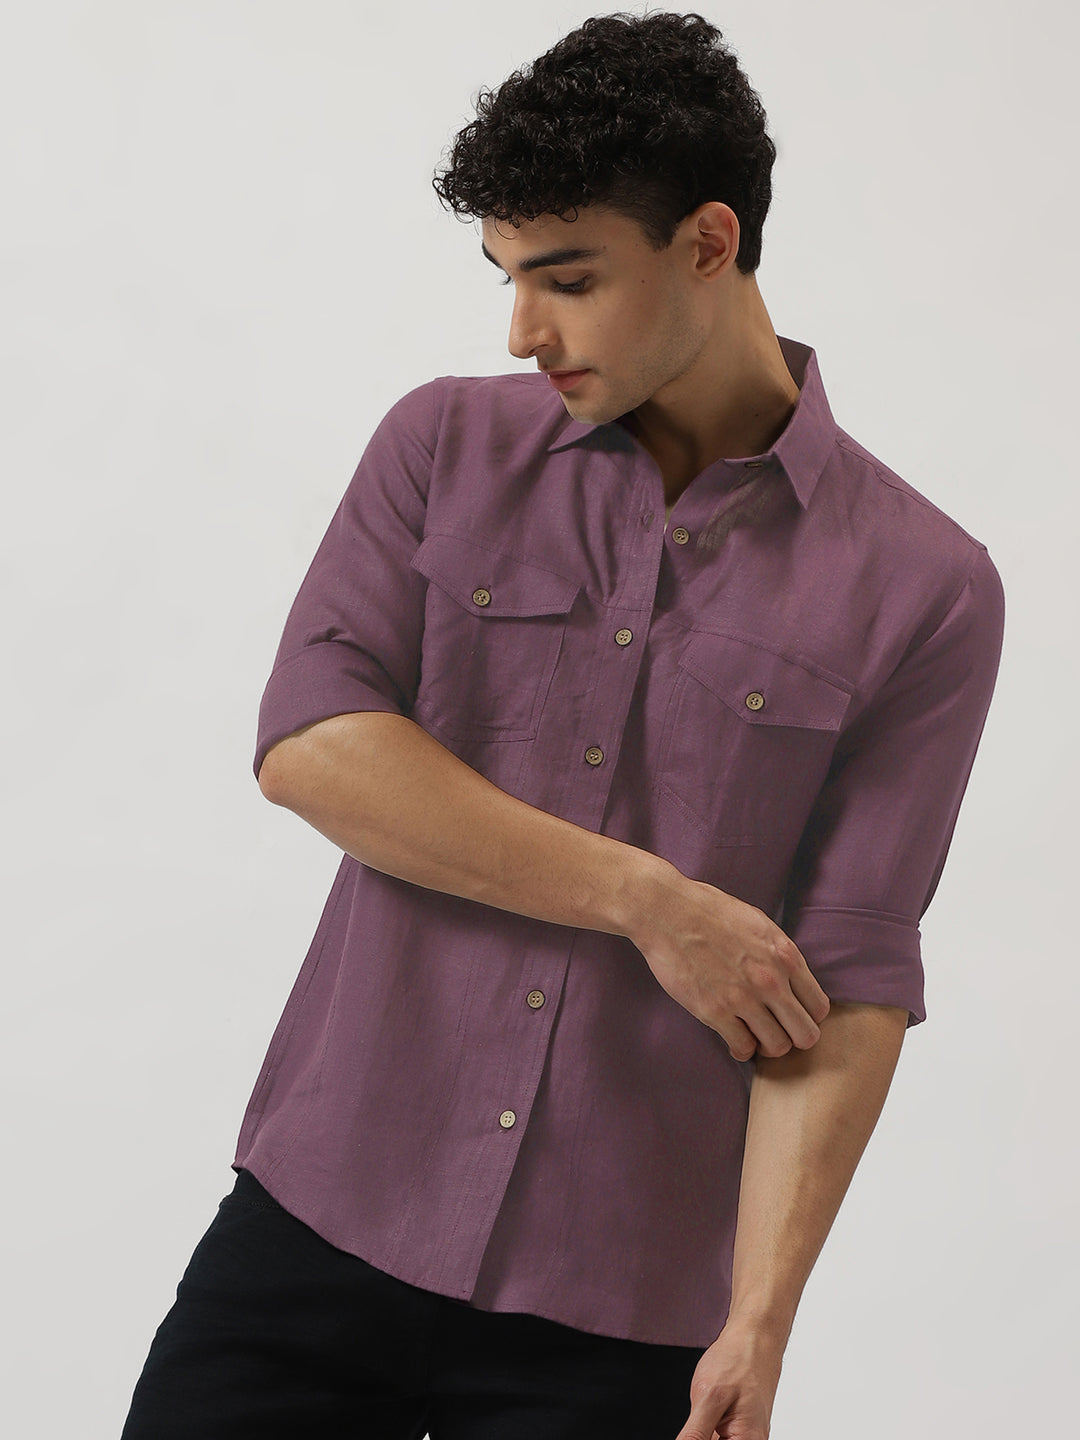 Thomas - Men's Pure Linen Double Pocket Full Sleeve Shirt - Berry Purple